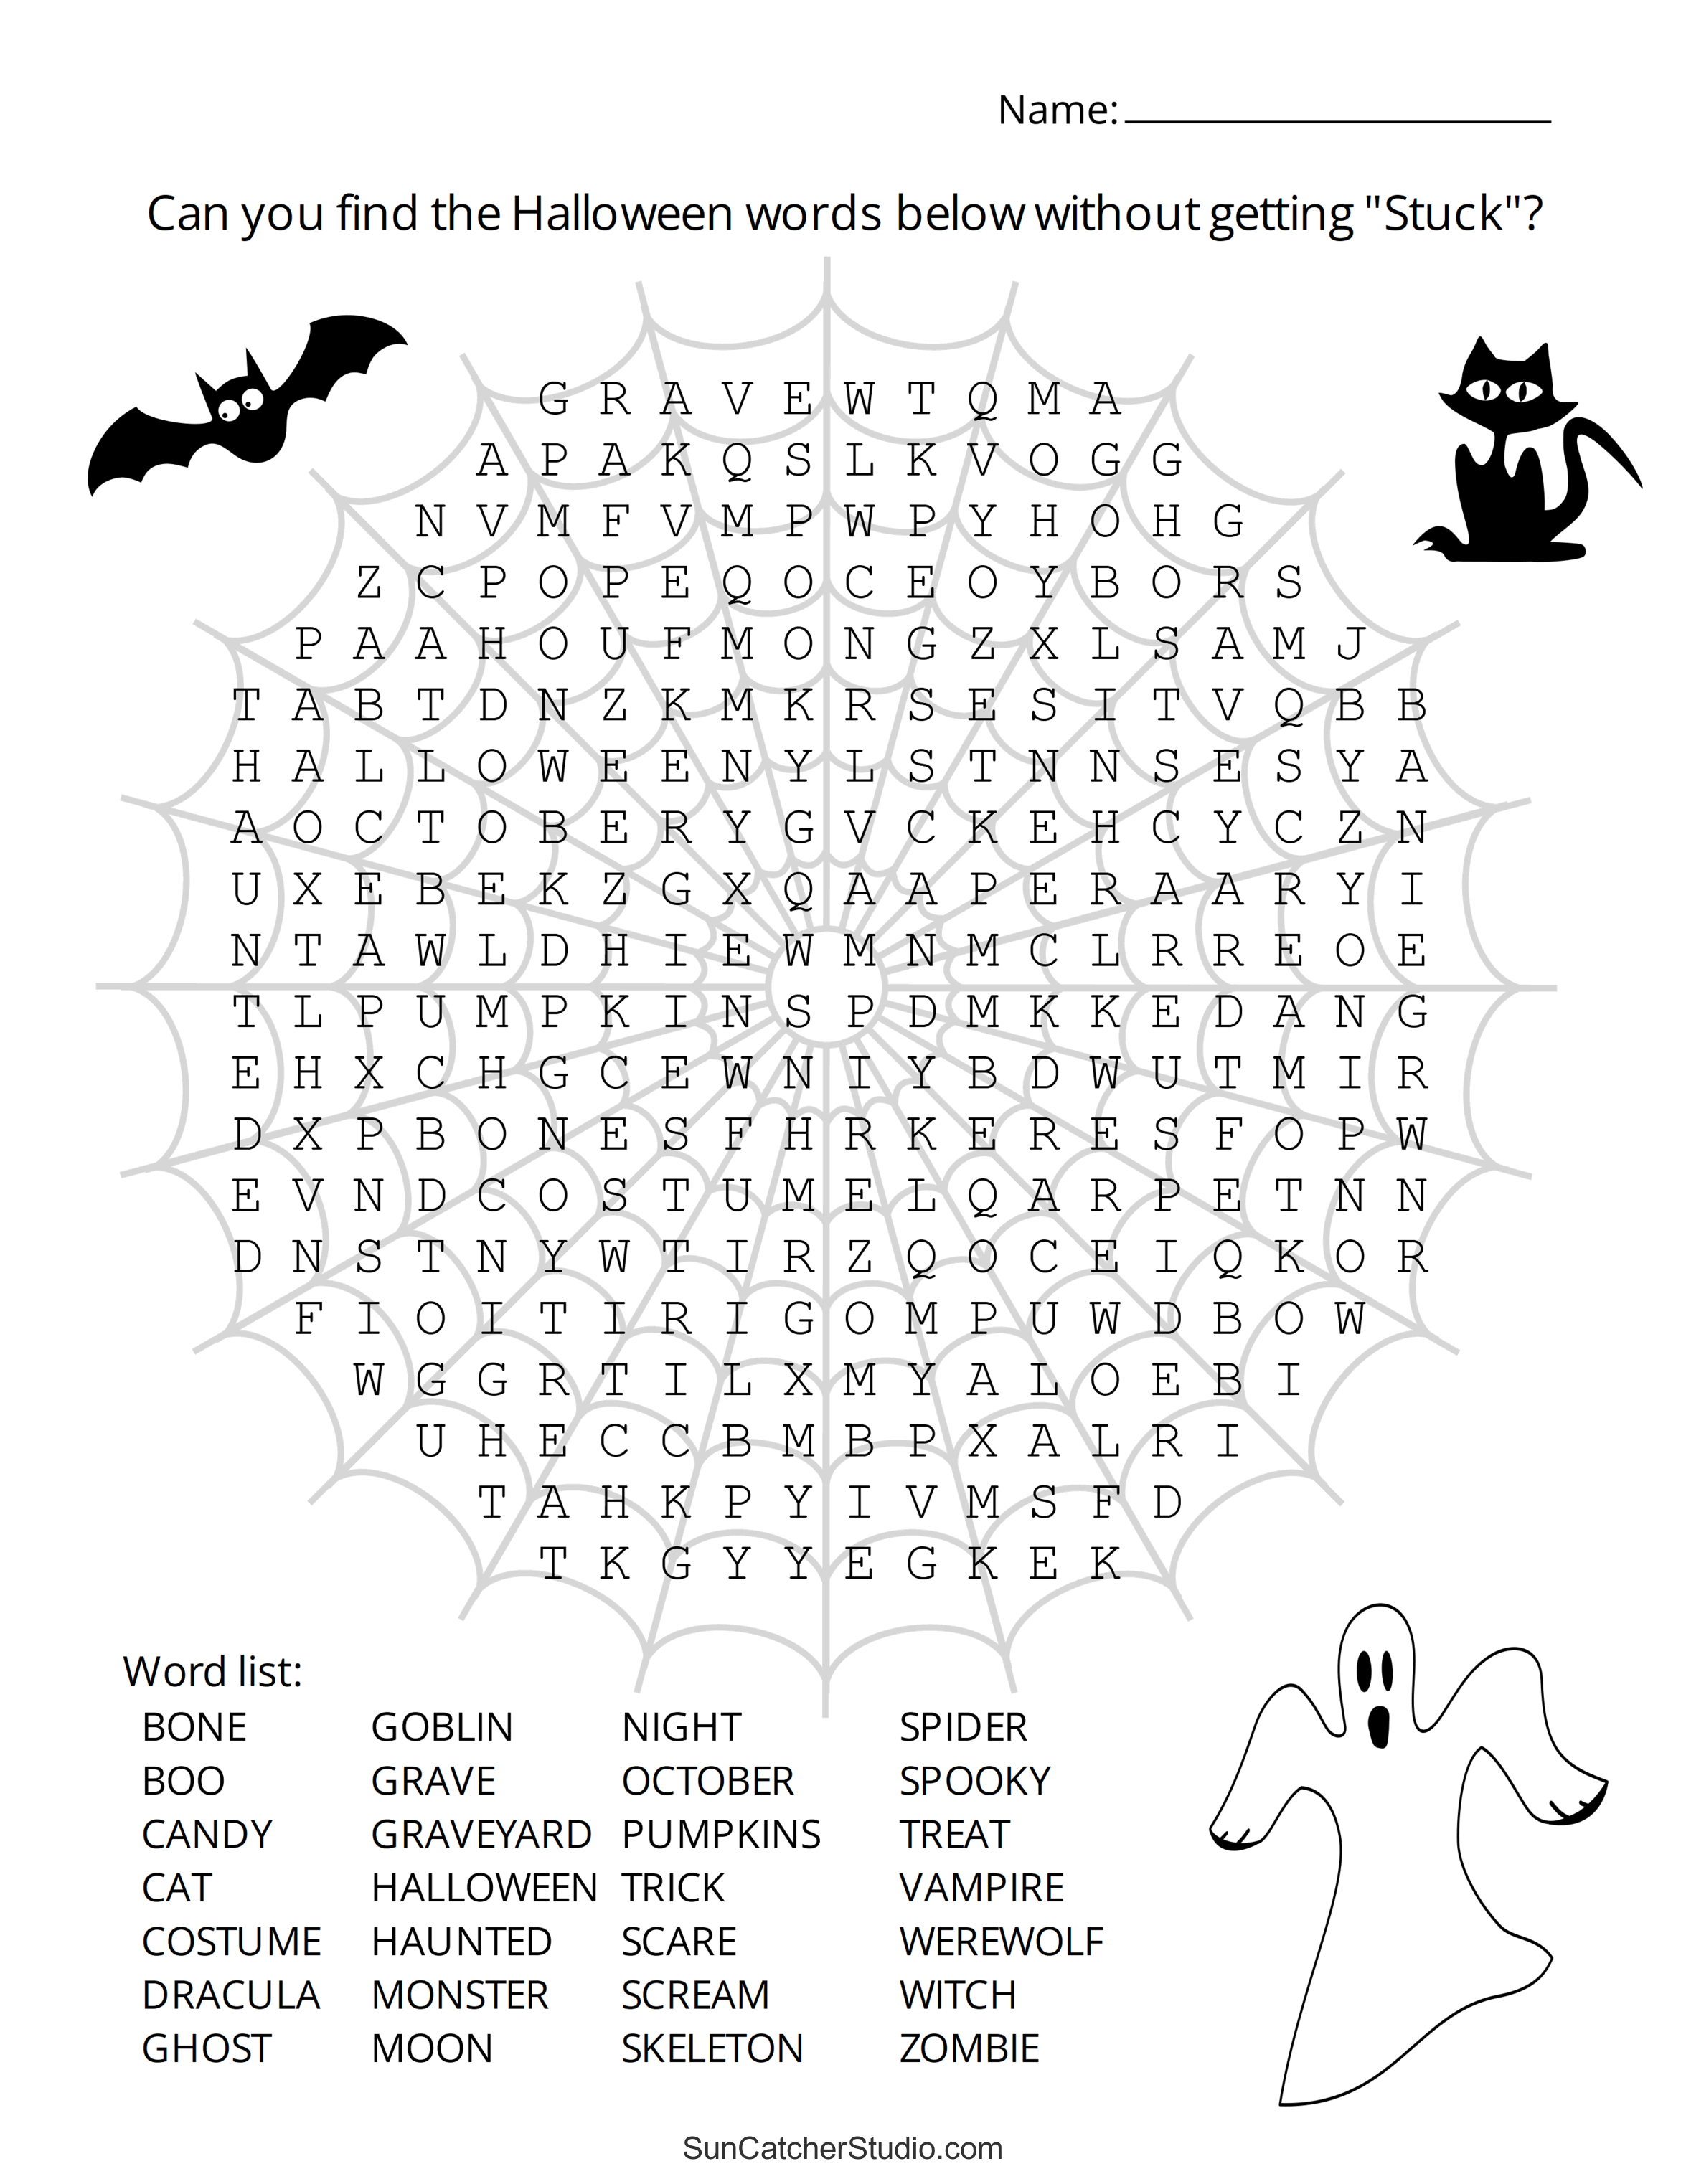 Halloween Word Search Printable - FREE - Growing Play